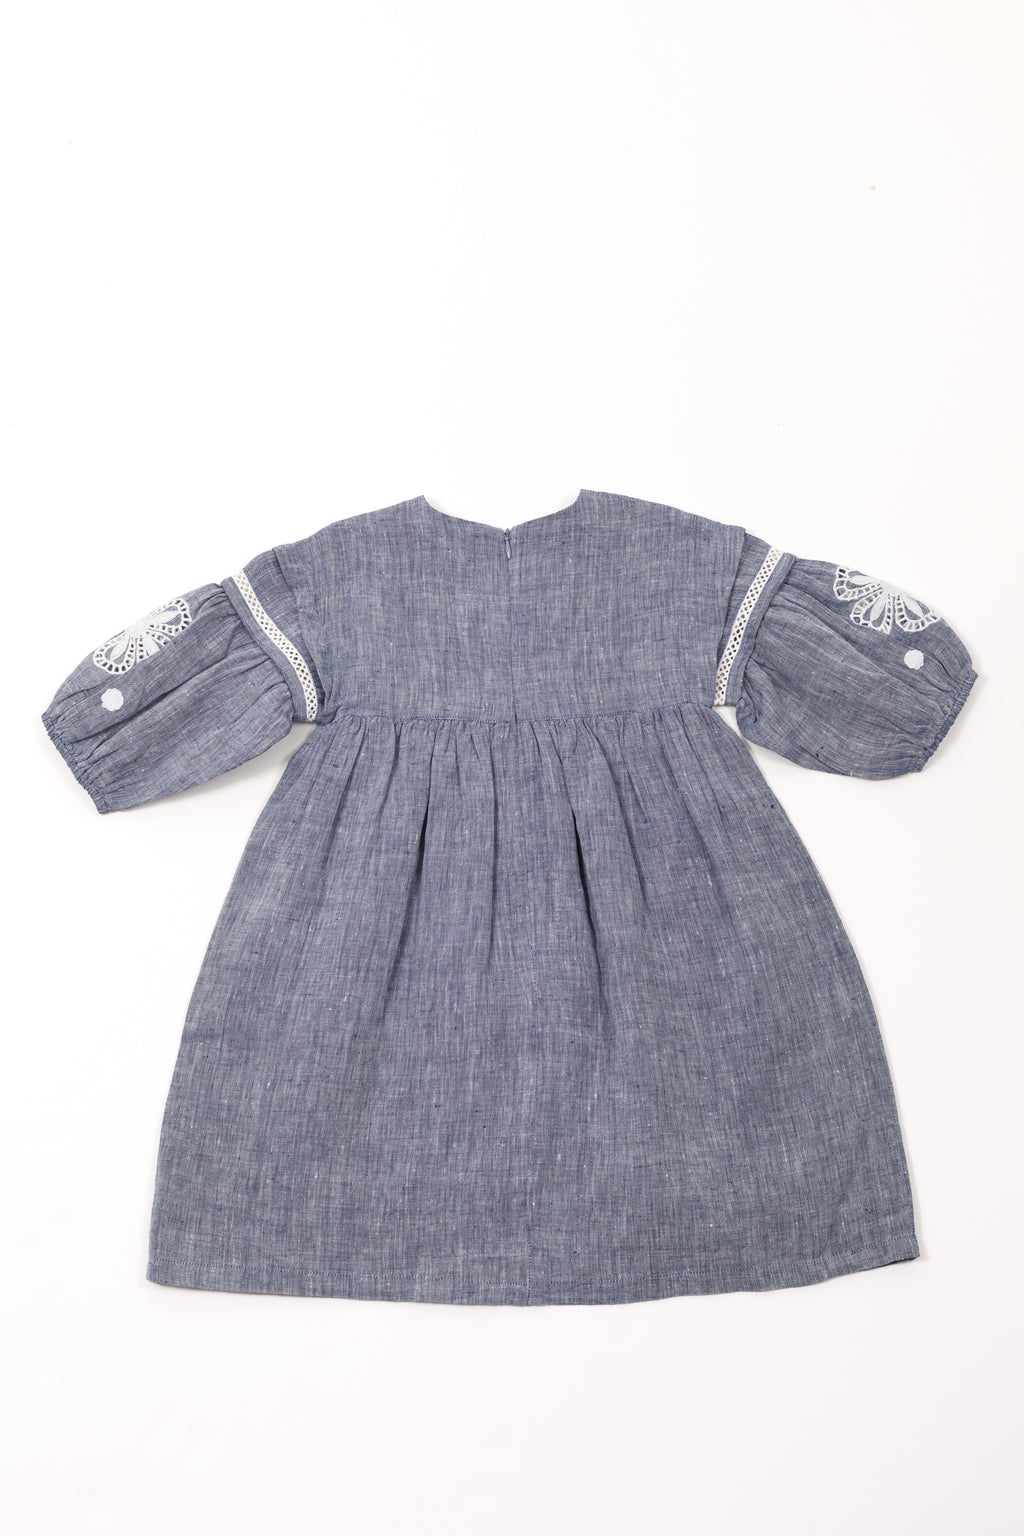 Dress - Blue Linen Embroidered